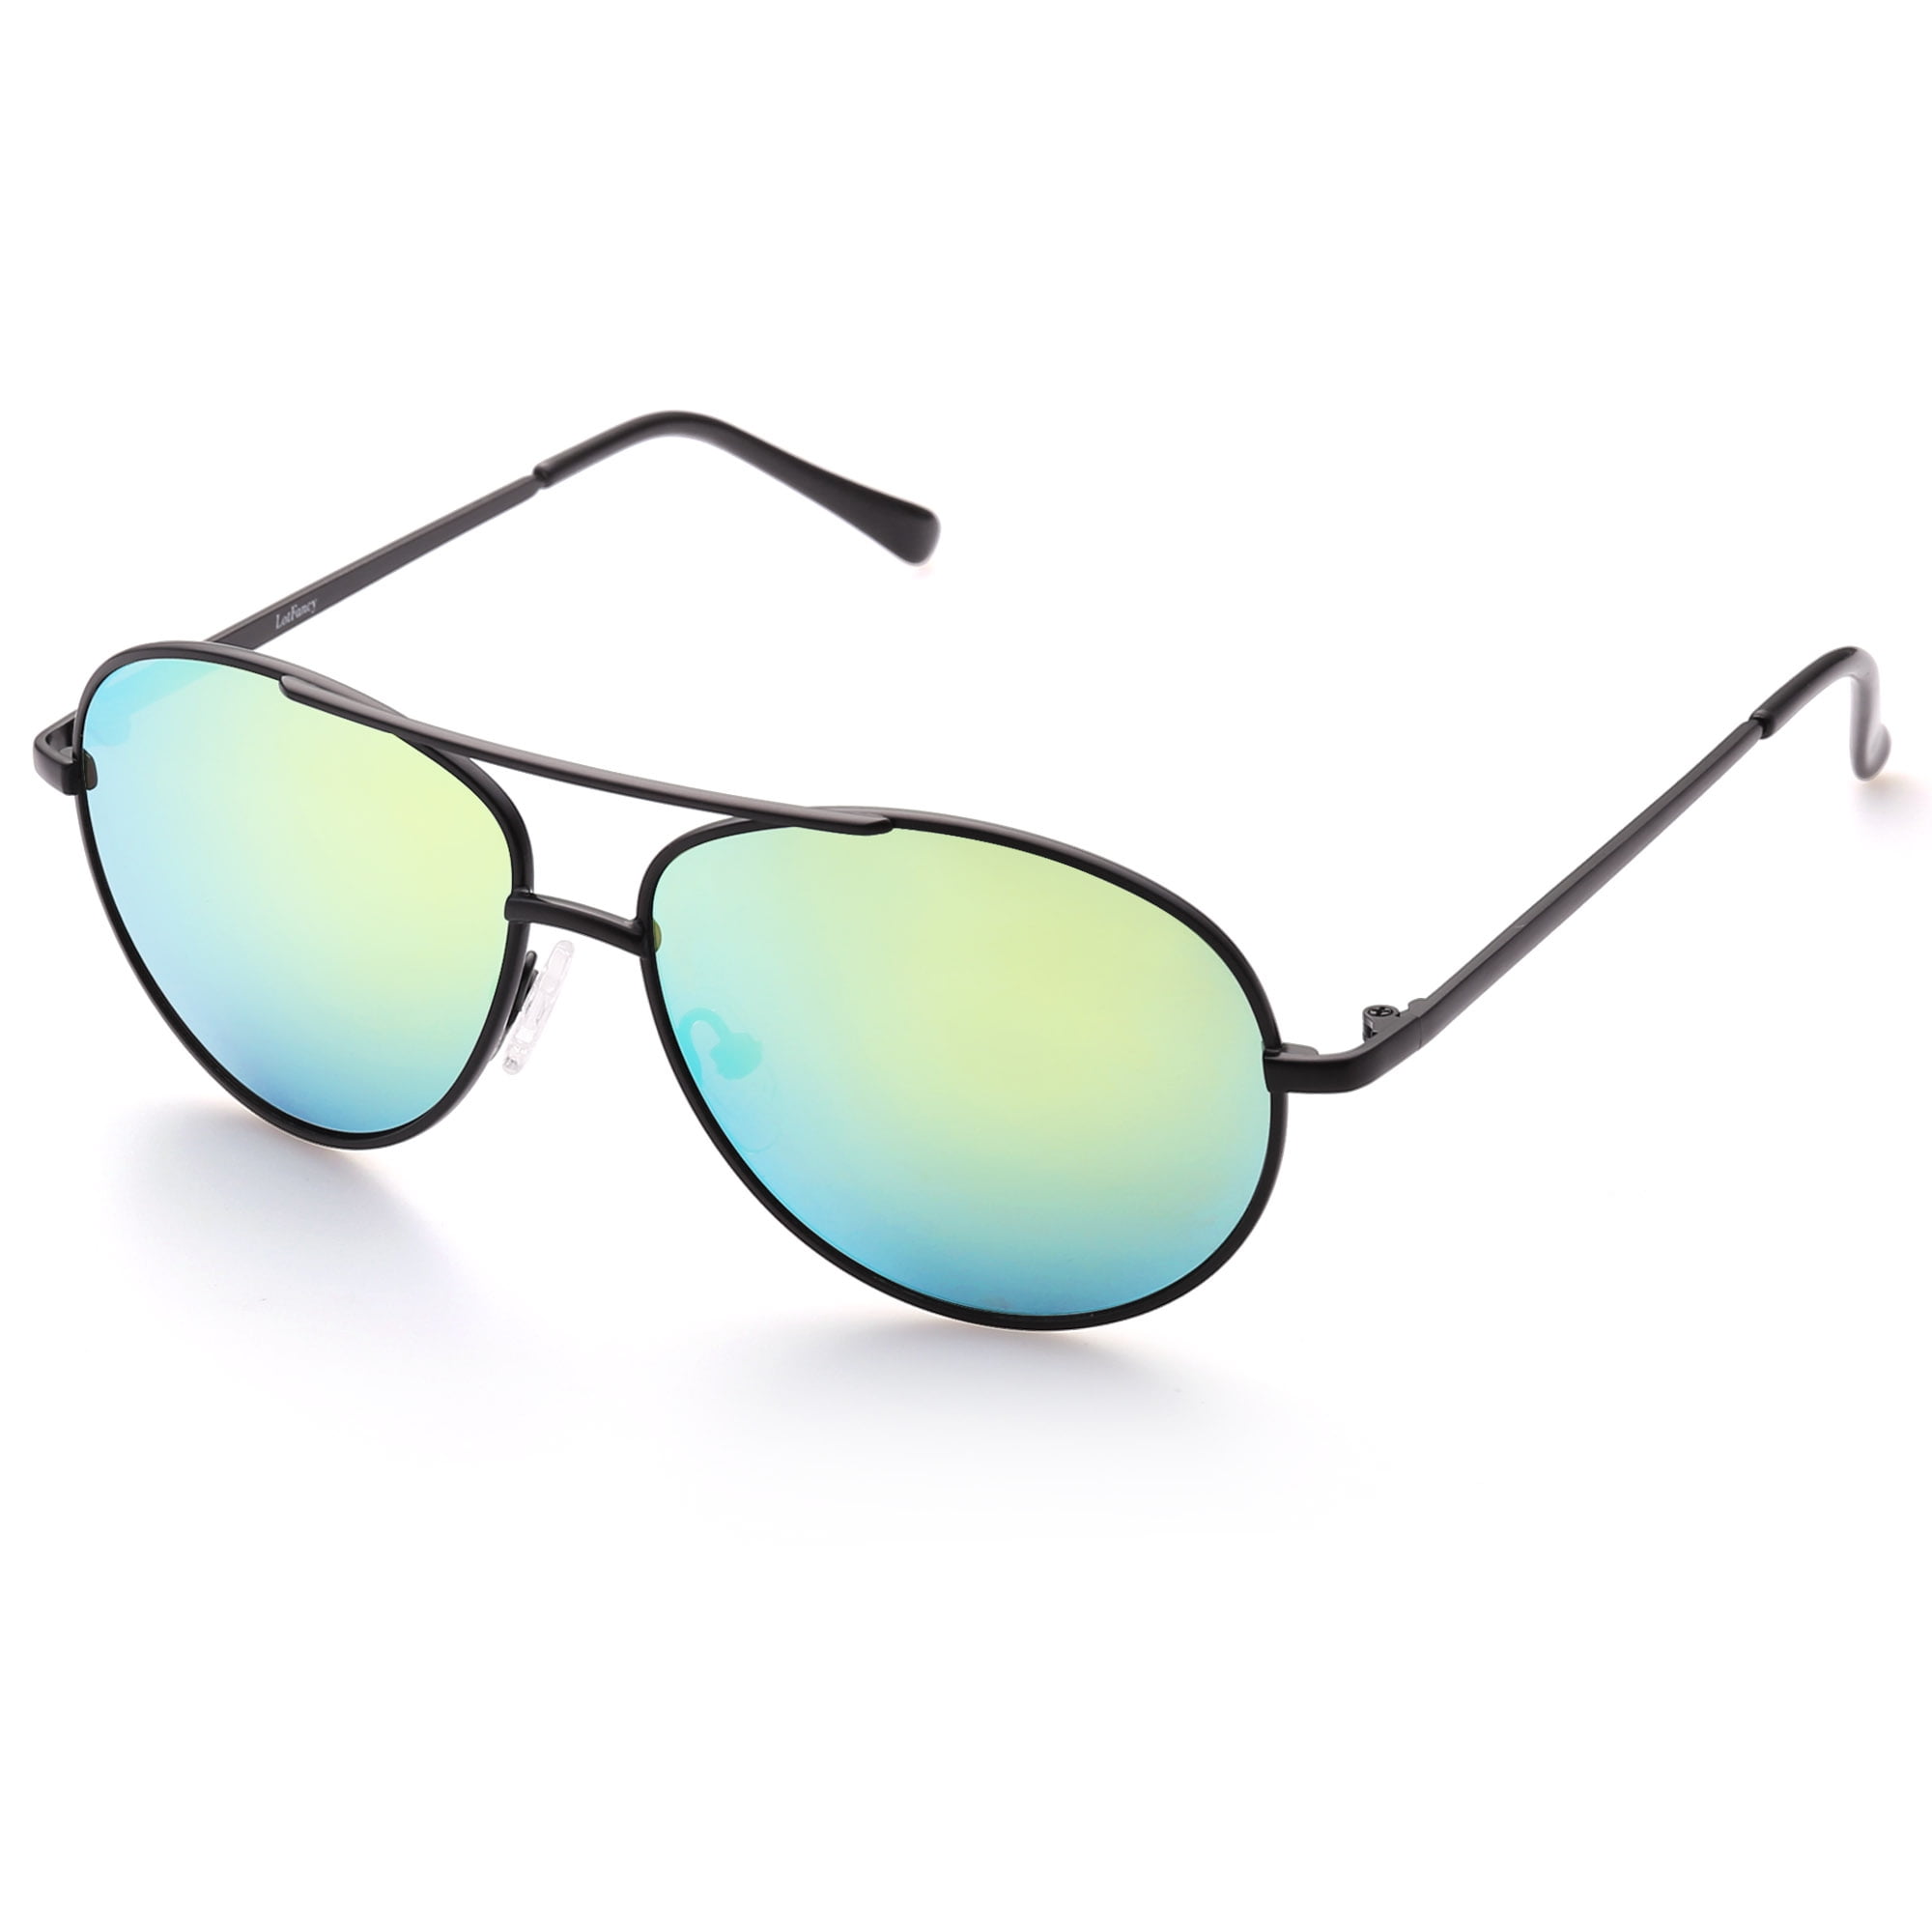 LotFancy NEW Fashion Aviator Sunglasses for Kids Girls Boys Children Ages 4-12 